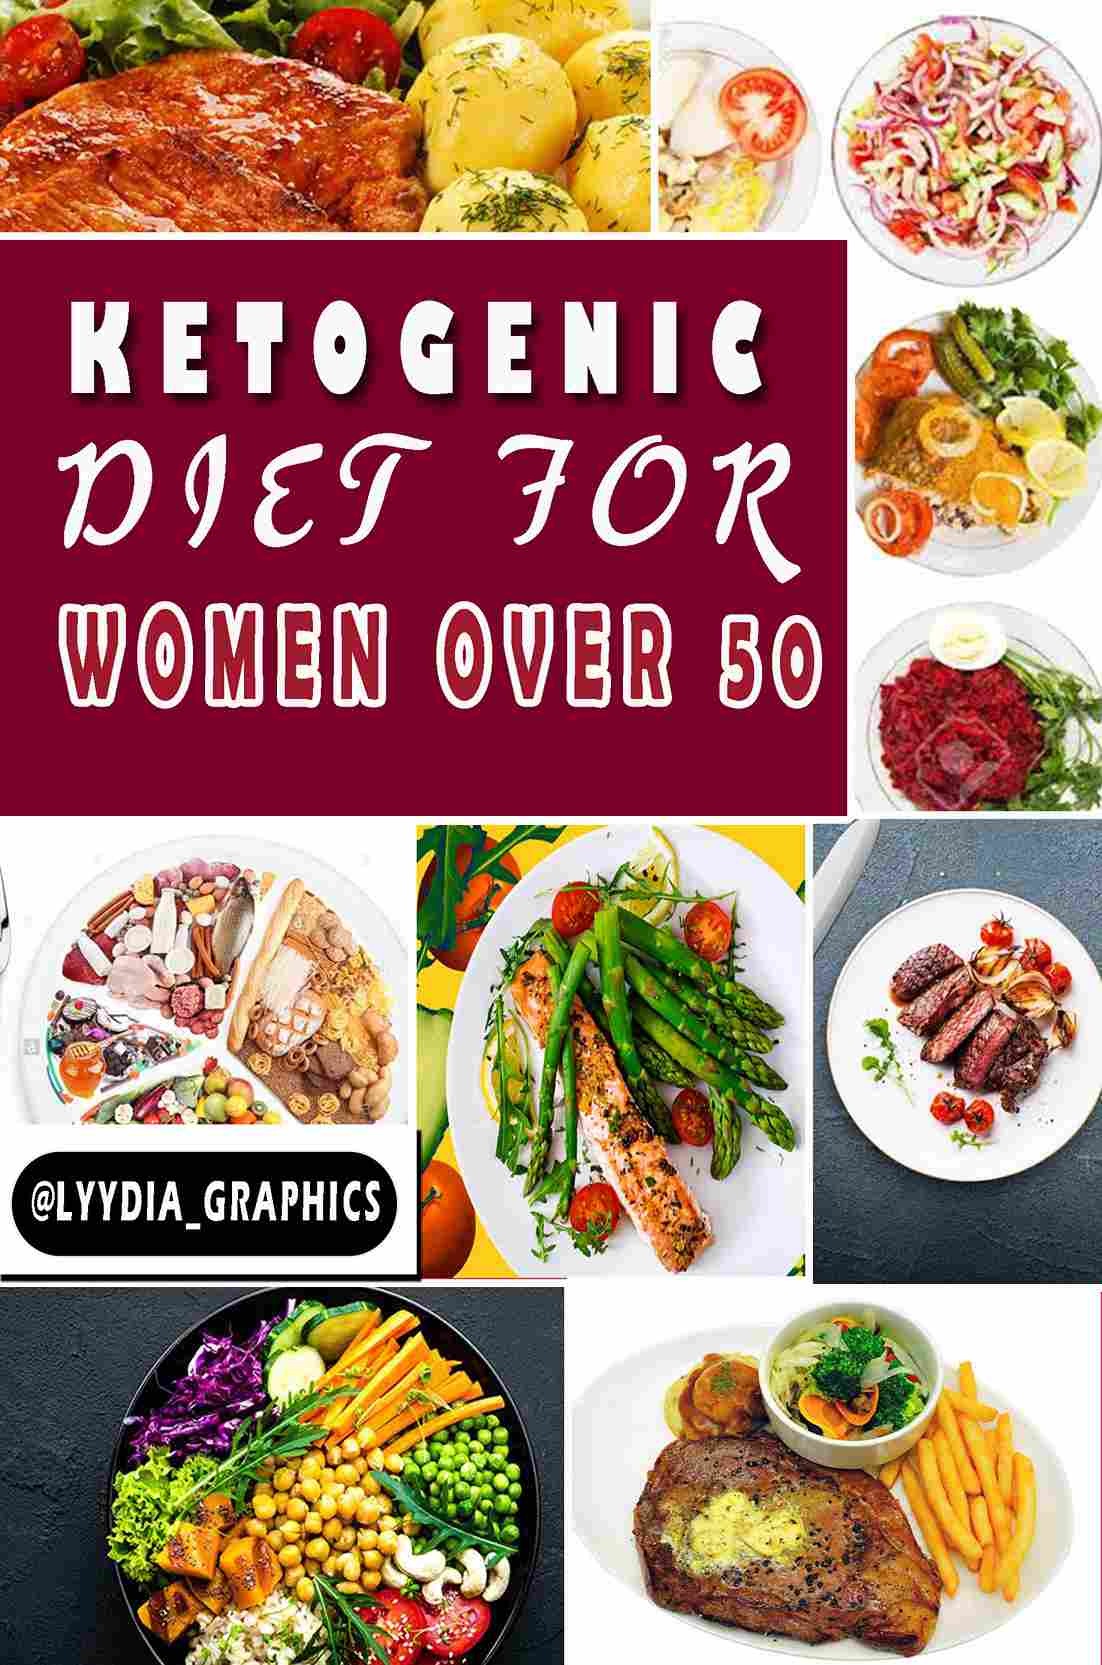 Ketogenic Diet for Women Over 50 : Book Cover Design